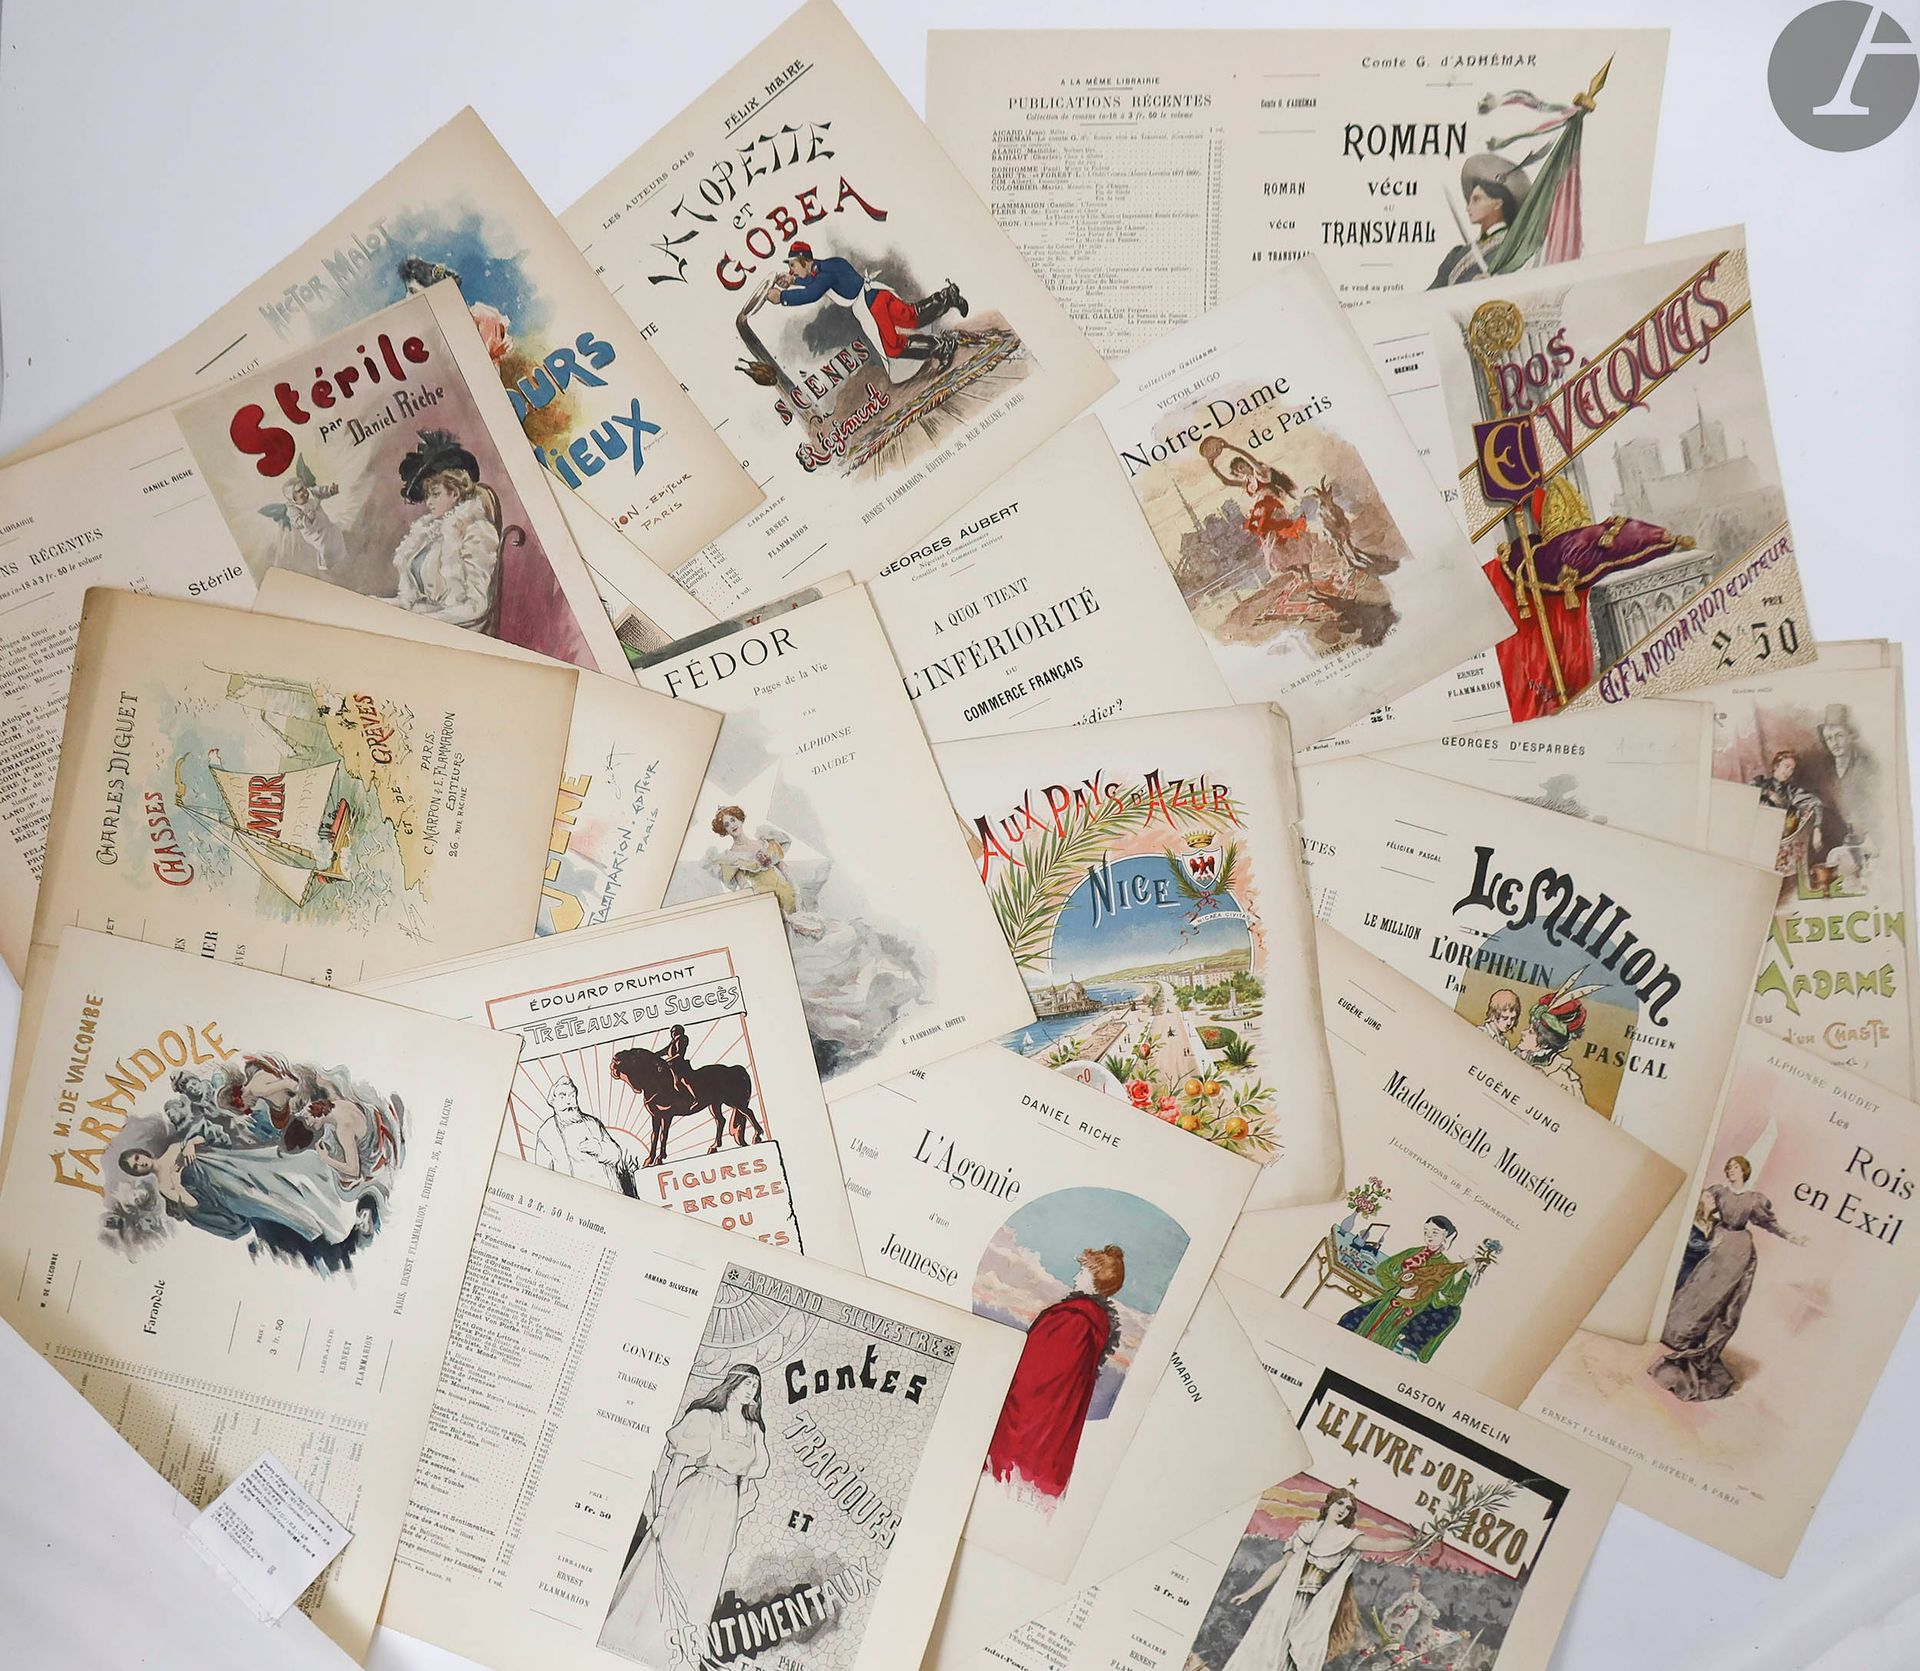 Null [COVERS].
收集了几百个19世纪和20世纪的原始书籍封面。

这些封面大部分都有插图，其中一些有垫子。很多都是多本。

插图作者包括罗比达（"&hellip;